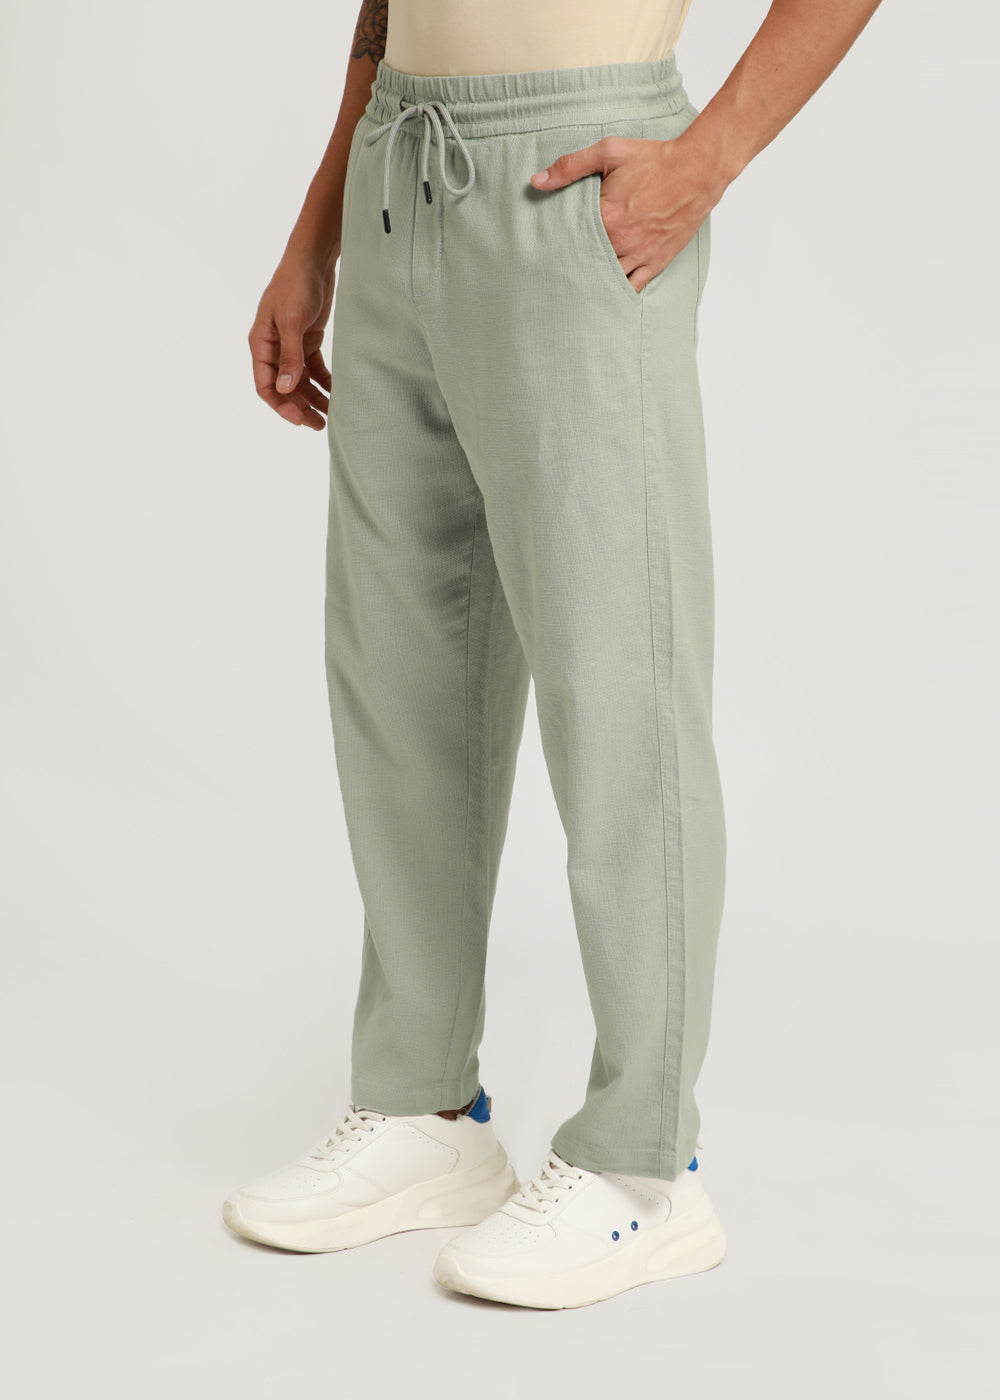 Pastel Green Textured Pants